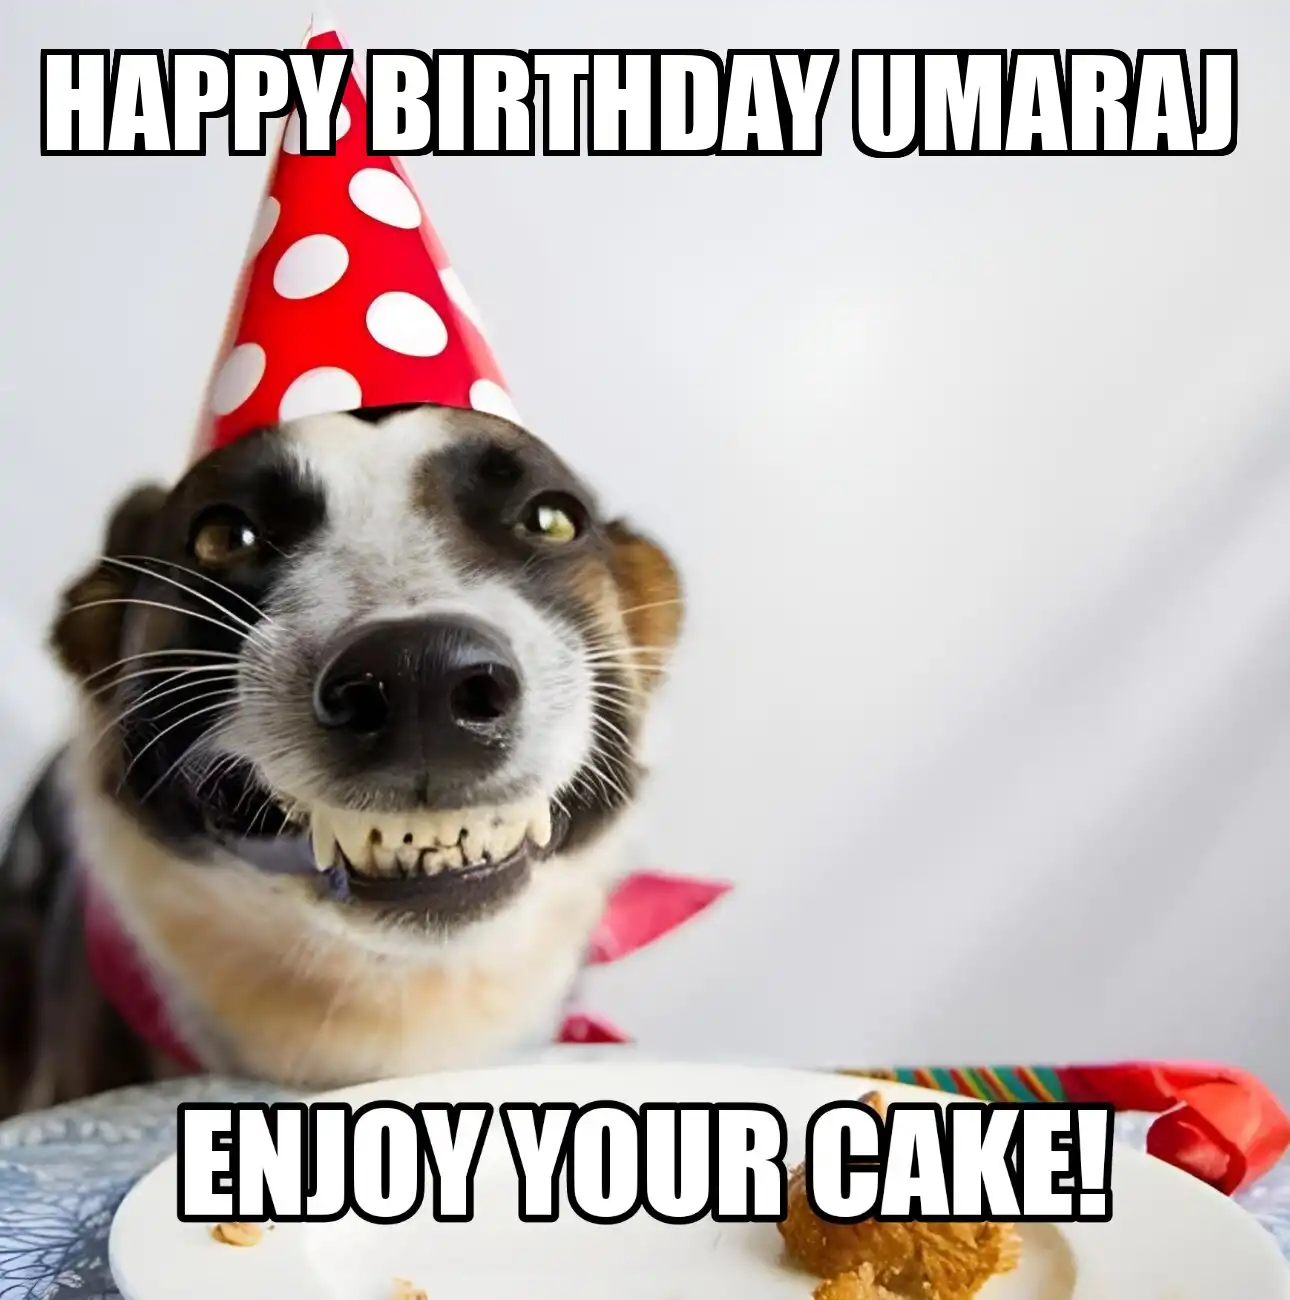 Happy Birthday Umaraj Enjoy Your Cake Dog Meme